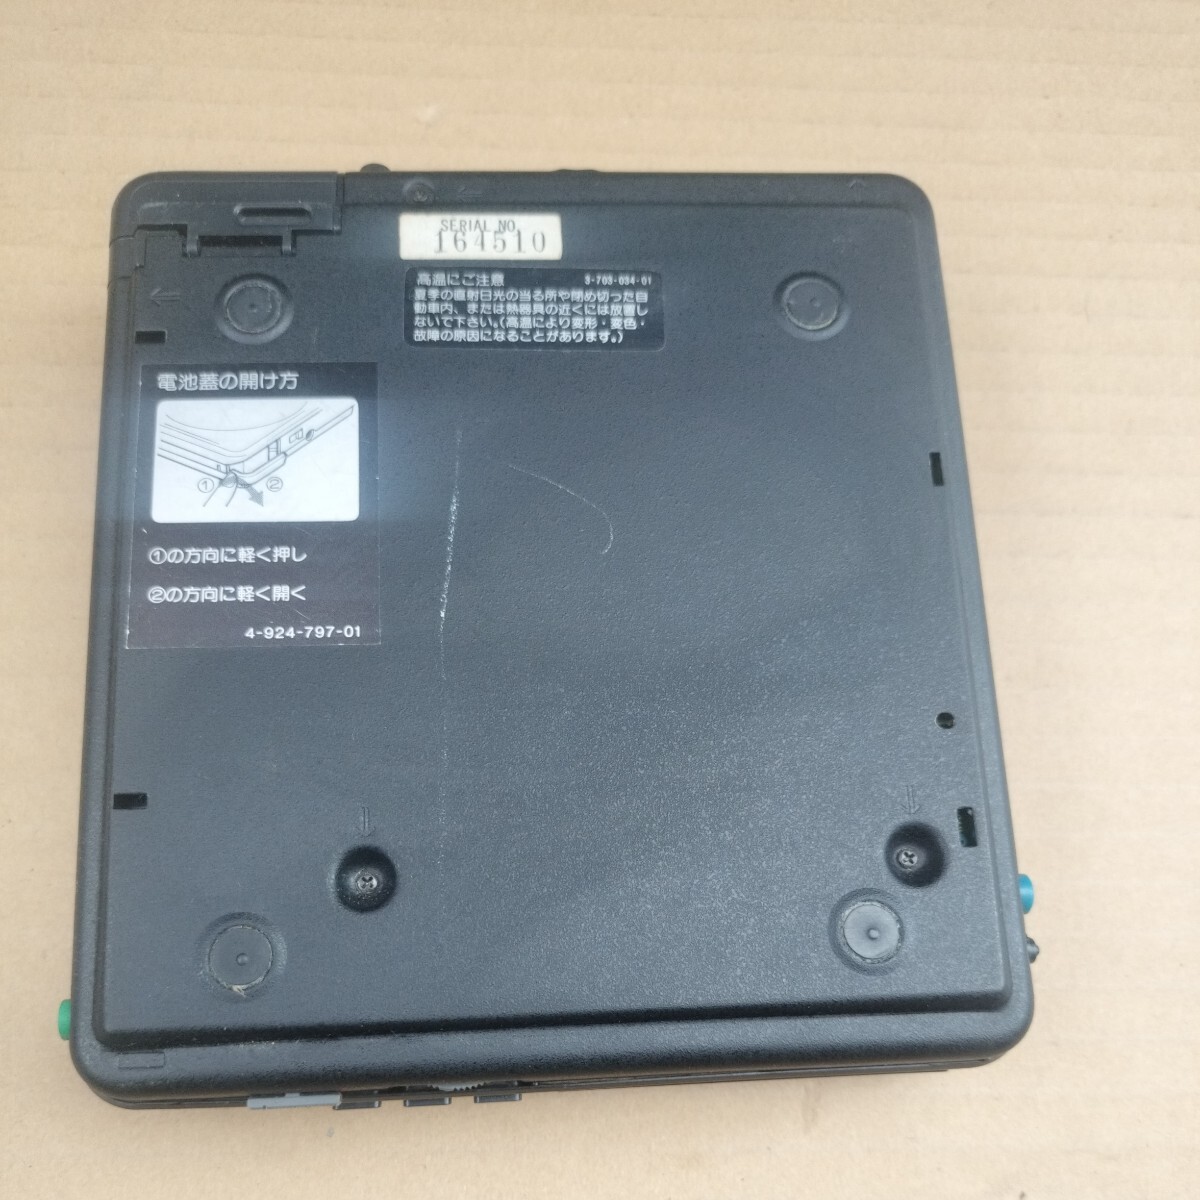 SONY Discman диск man D-40 CD плеер портативный плеер 60509-1